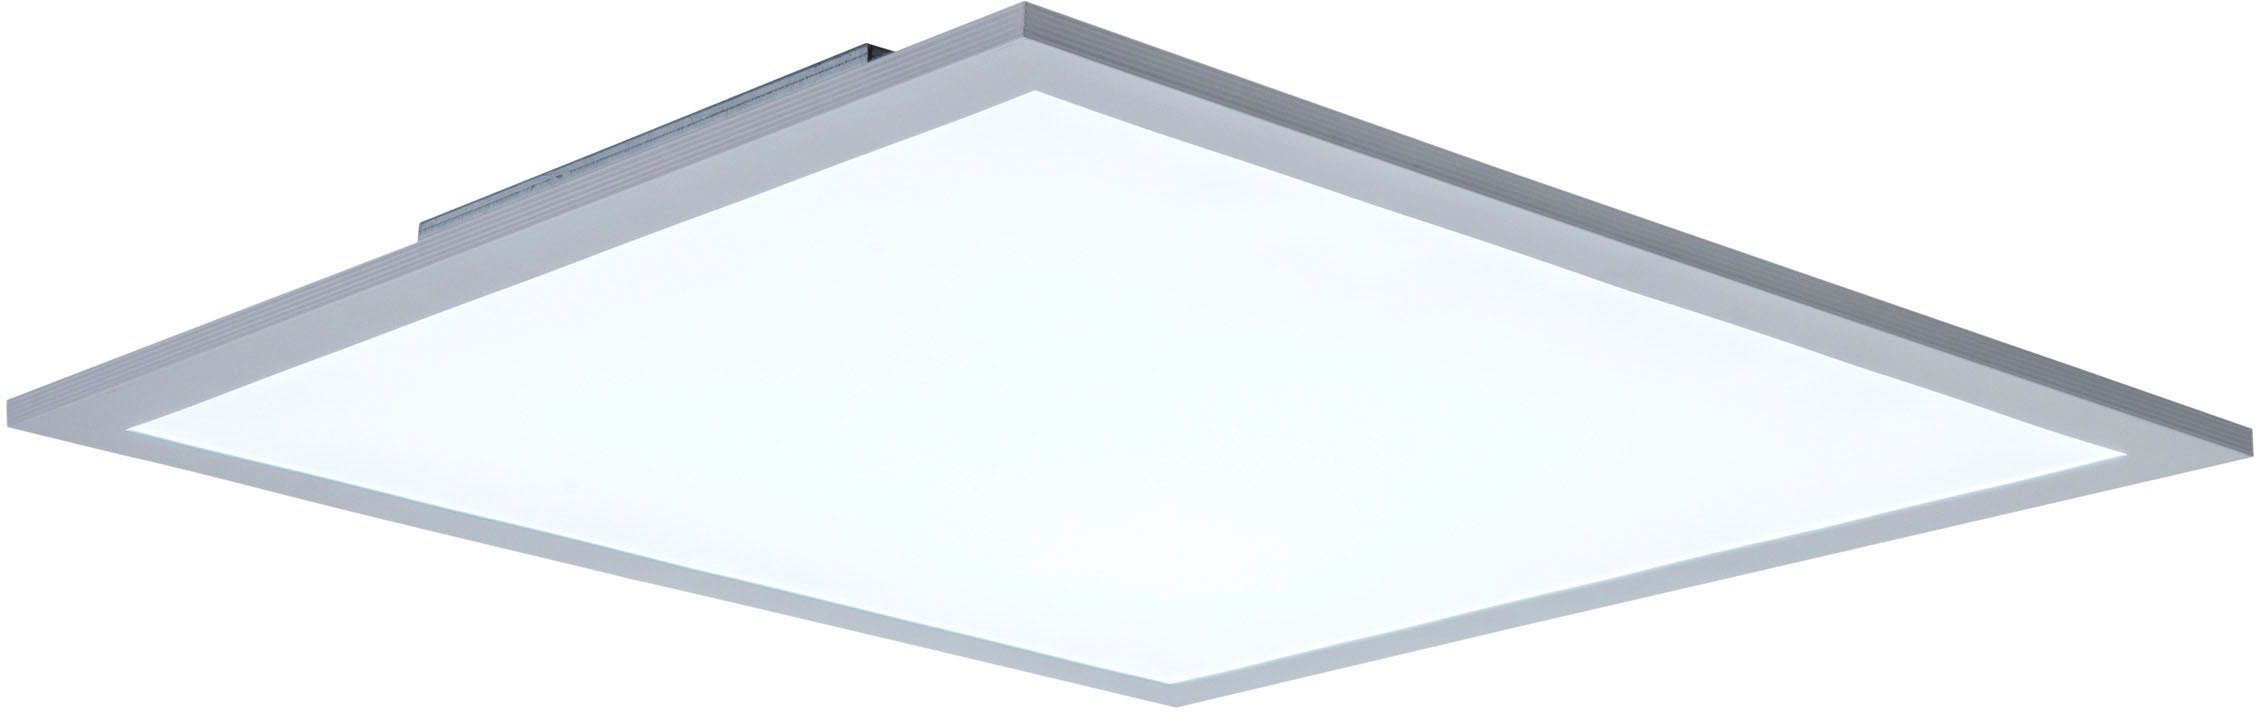 LED, 120 Nicola, Lichtfarbe LED neutralweiß 6cm, fest integriert, Neutralweiß, Panel LED Aufbaupanel näve 45x45cm, H: weiß